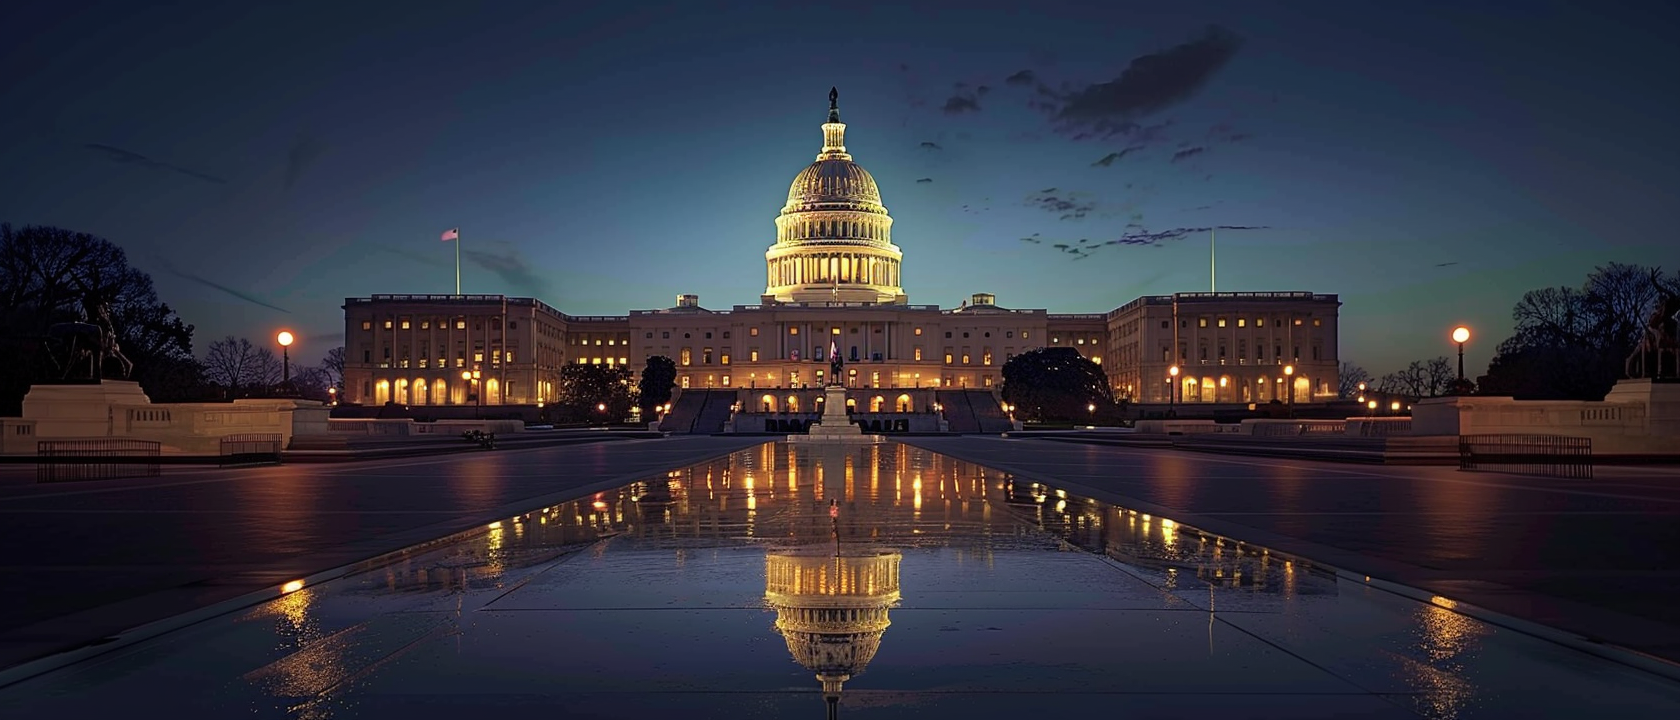 FISA Surveillance Program Reauthorized After Late-Night Senate Vote